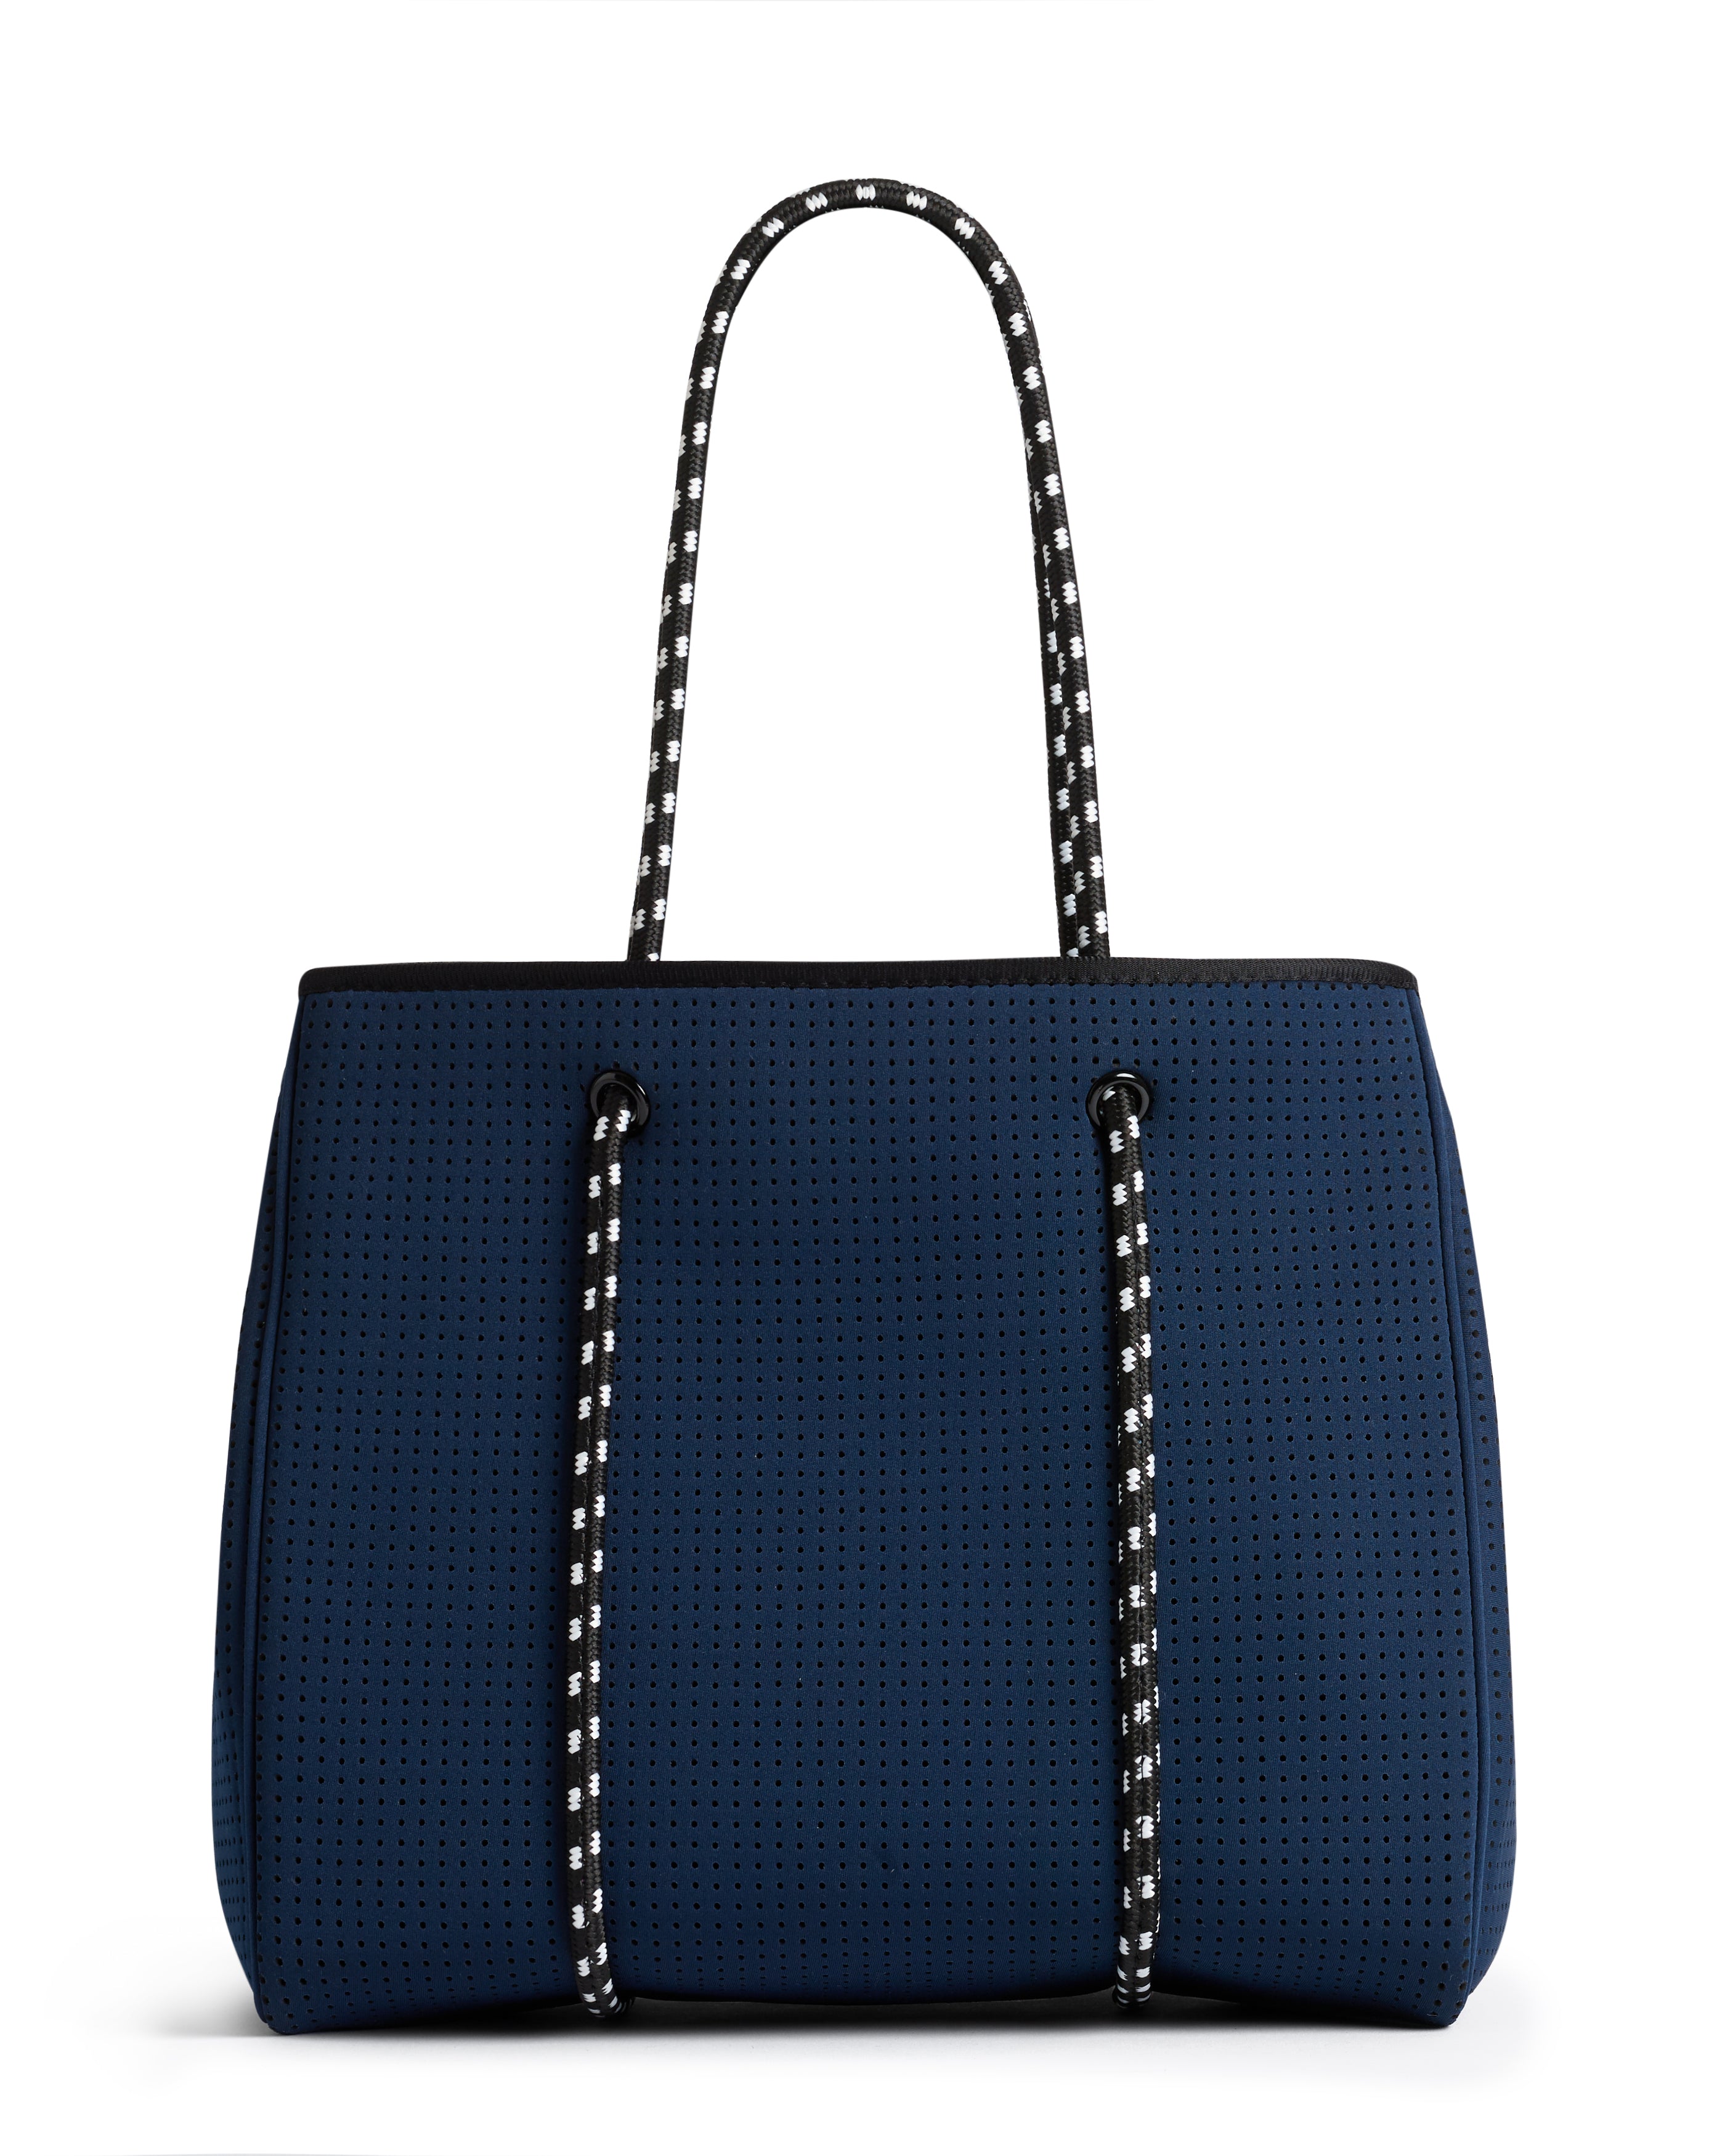 Prene Bags - The Sorrento Bag (NAVY BLUE) Perforated Neoprene Bag